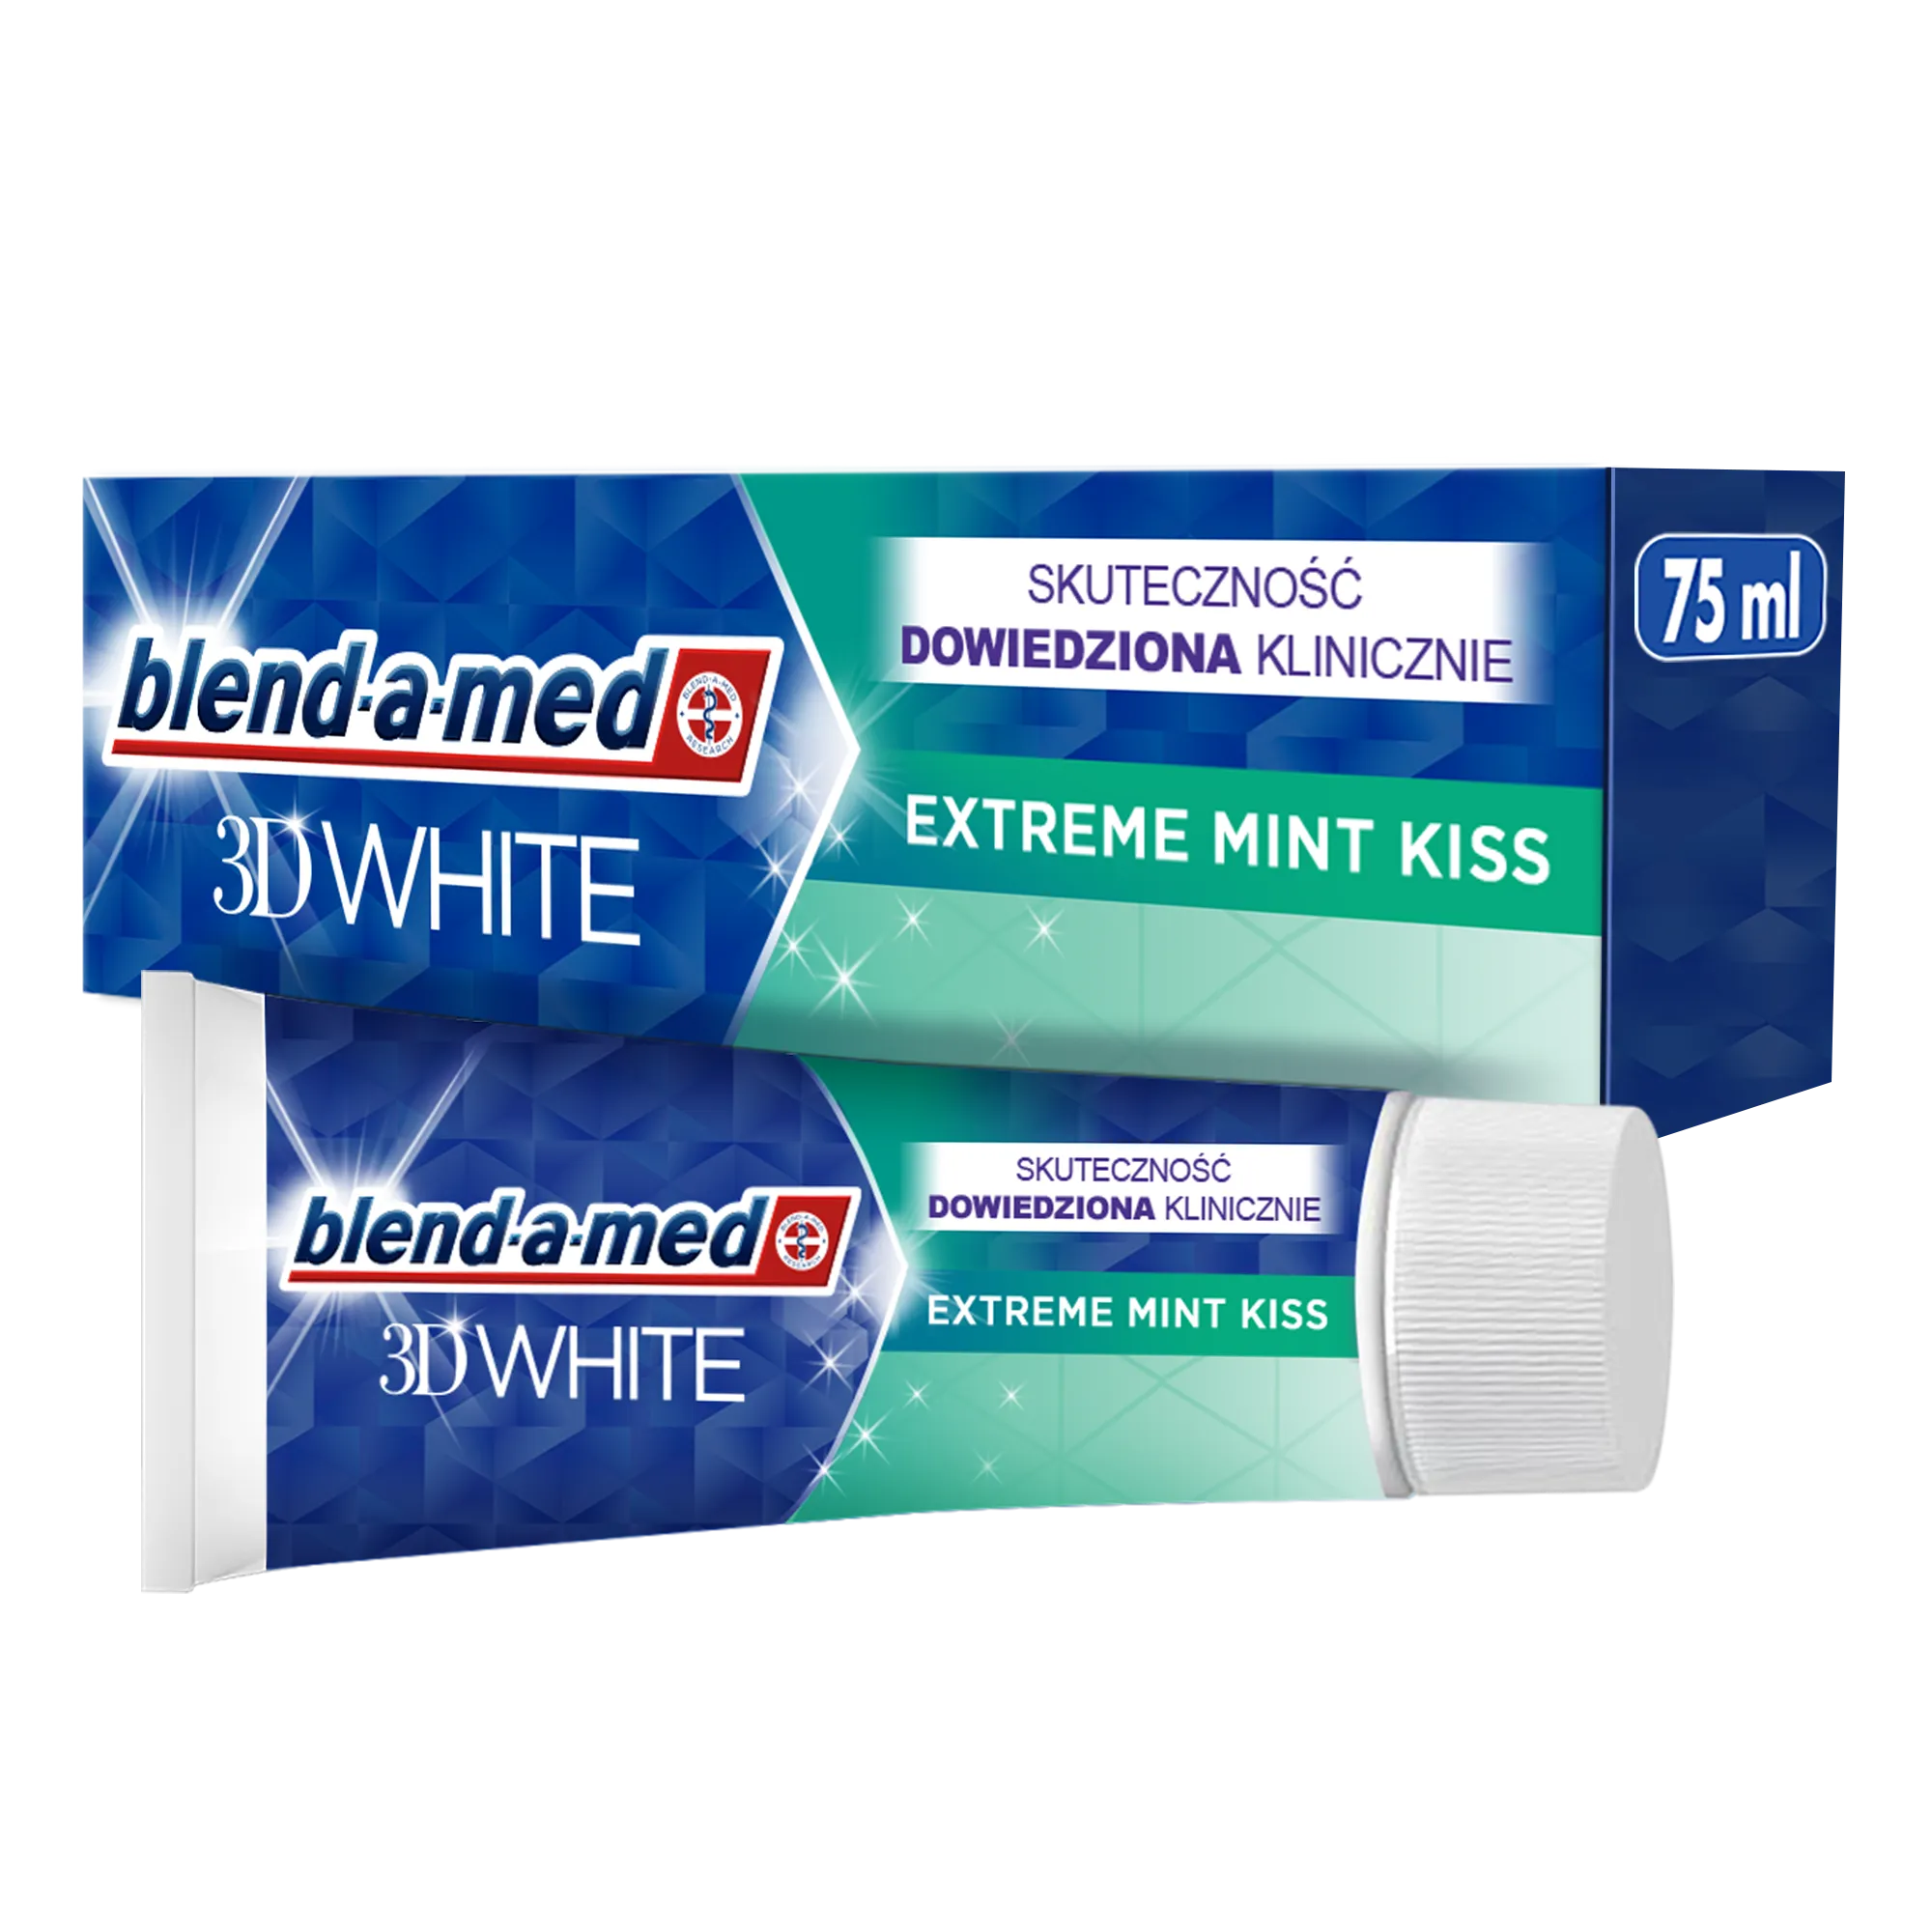 Blend-a-med 3D White Extreme Mint Kiss wybielająca pasta do zębów, 75 ml